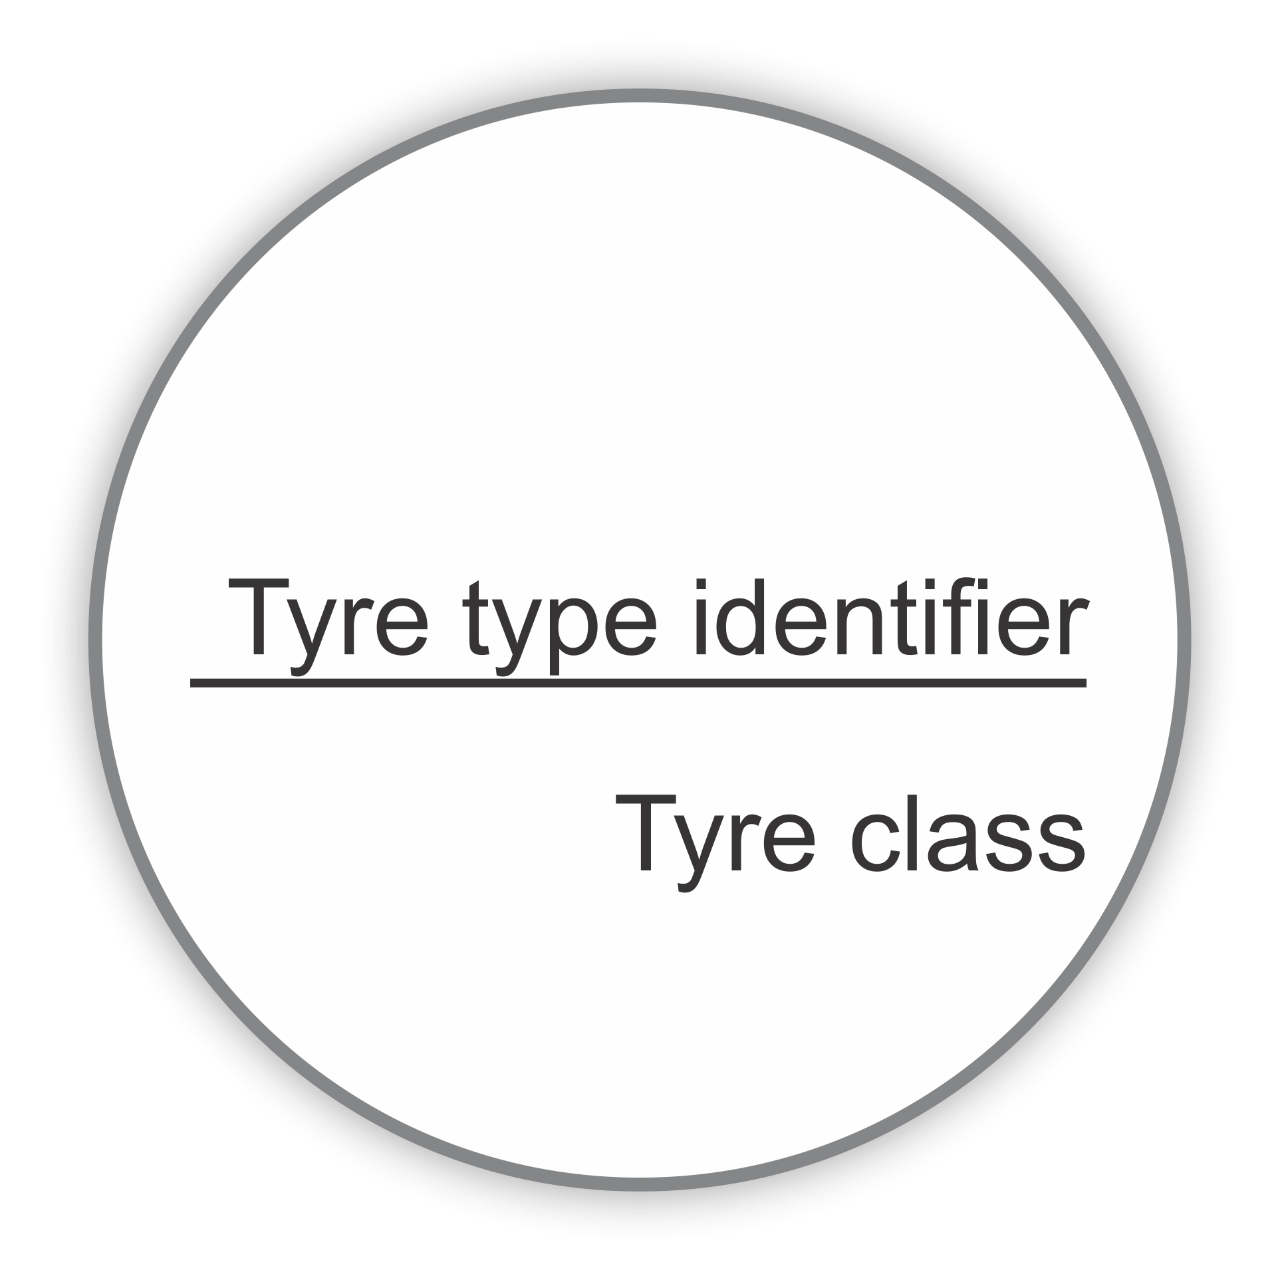 Tyre Type Identifier Symbol from new tyre label 2021